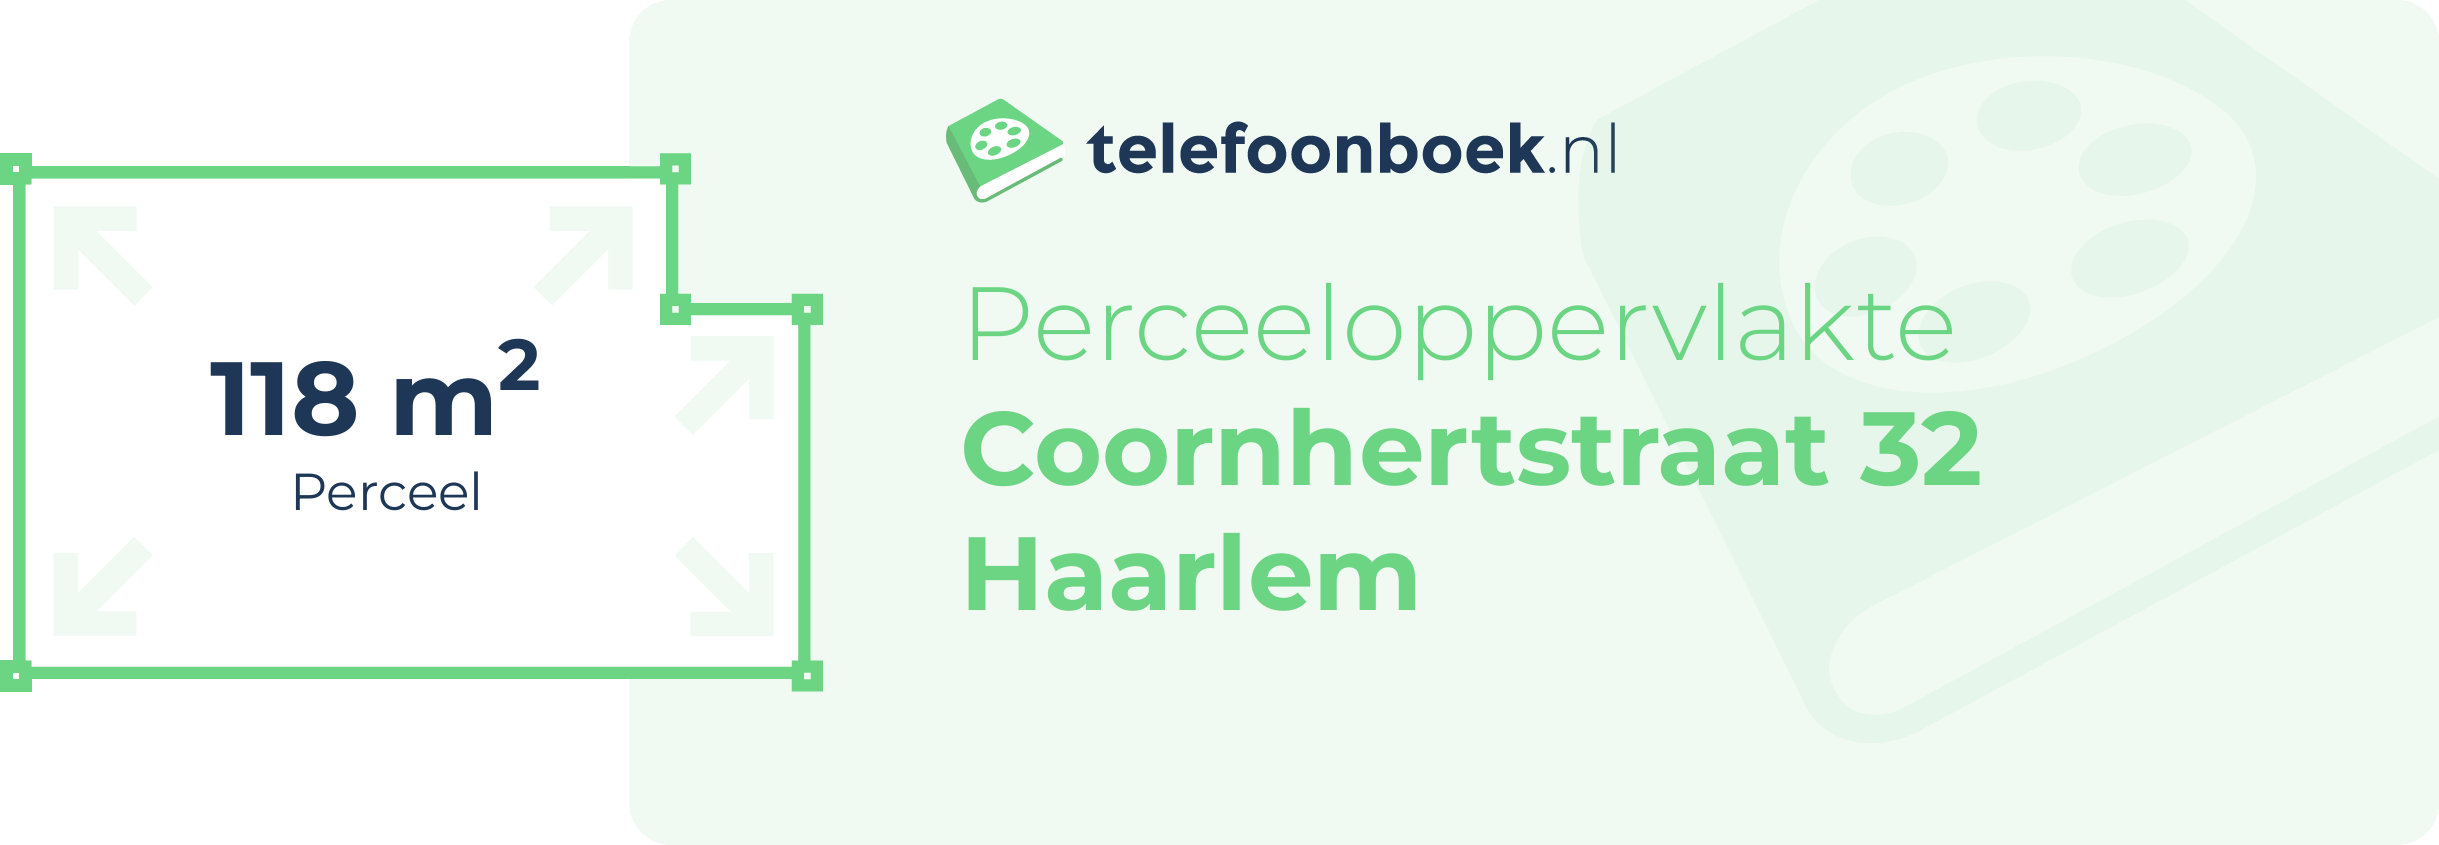 Perceeloppervlakte Coornhertstraat 32 Haarlem